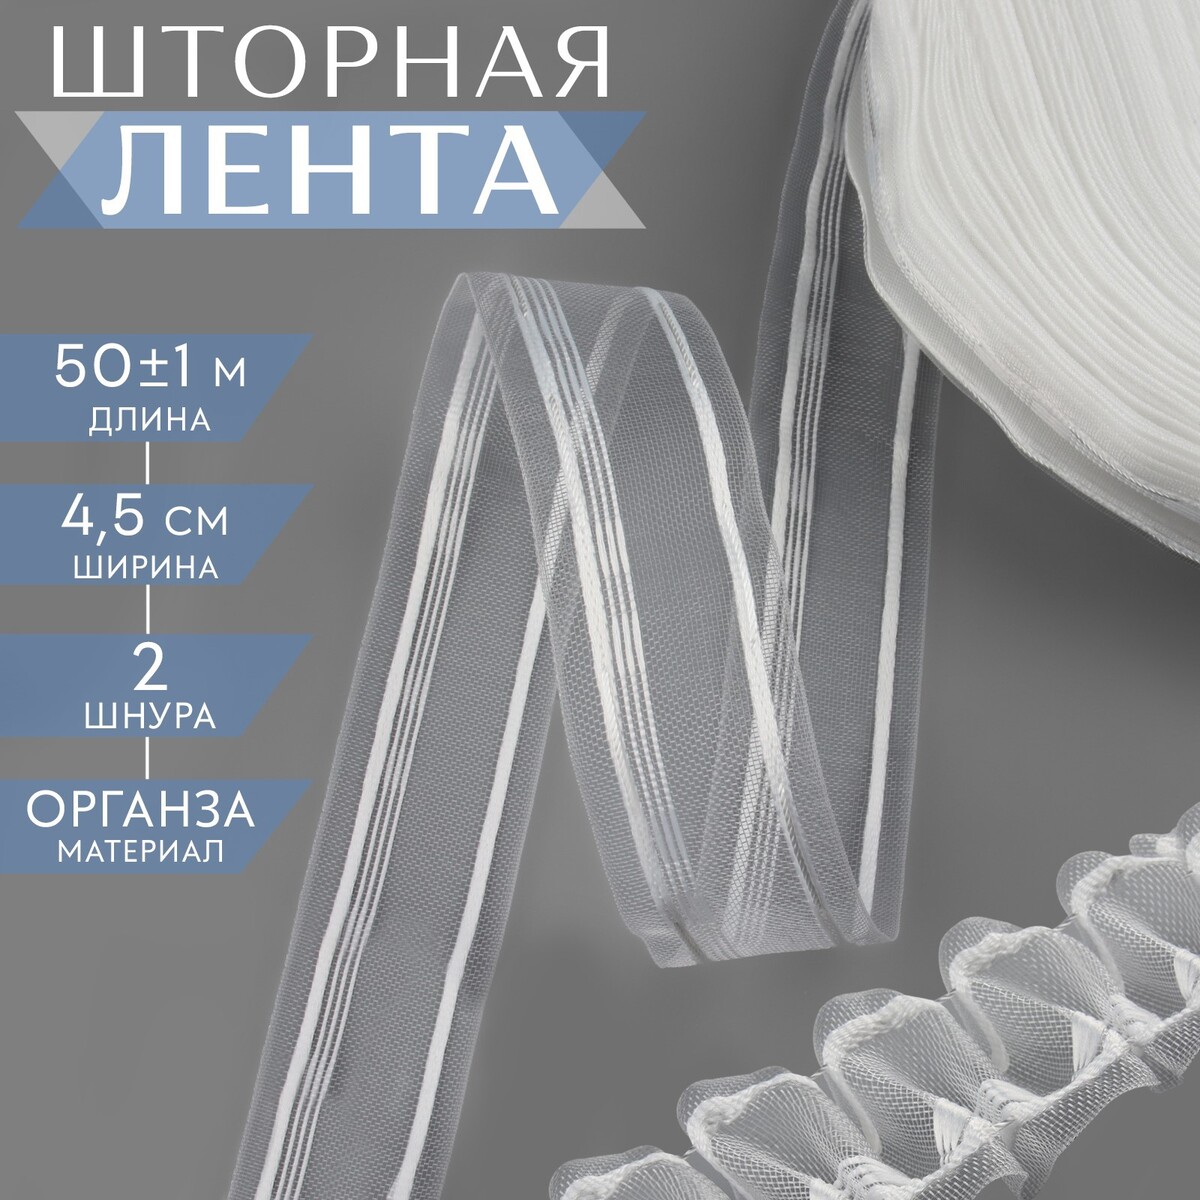 Шторная лента, органза, 4,5 см, 50 ± 1 м, цвет прозрачный/белый шторная лента классическая органза 2 5 см 100 ± 1 м прозрачный белый